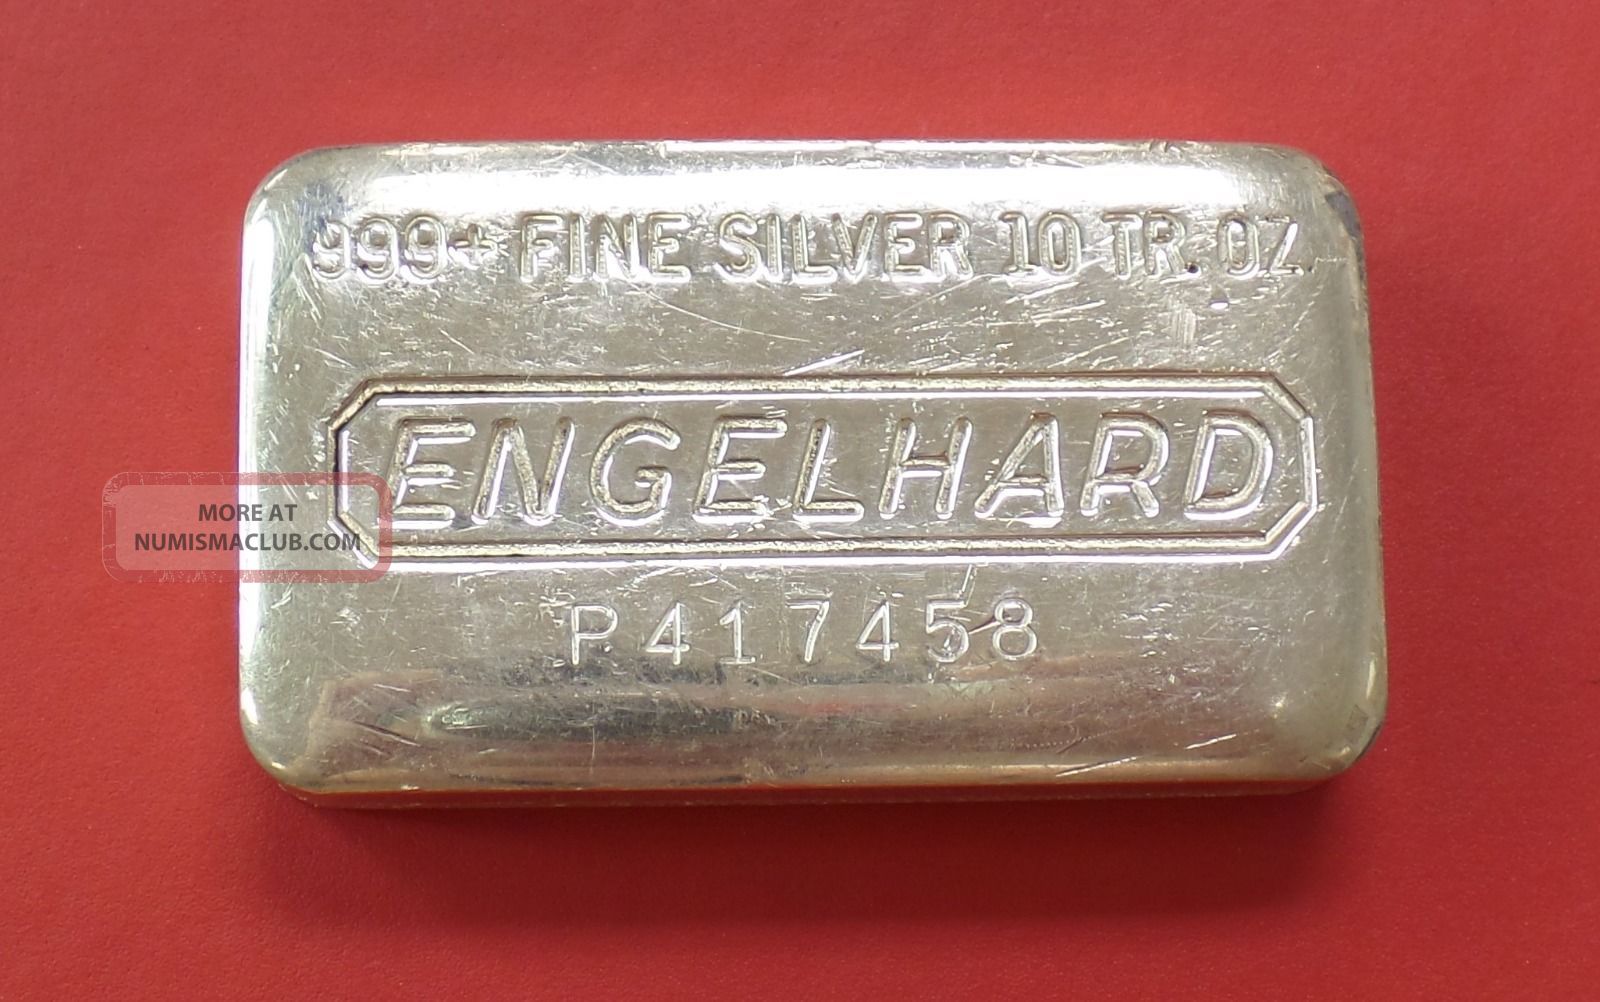 1 oz silver bar serial number